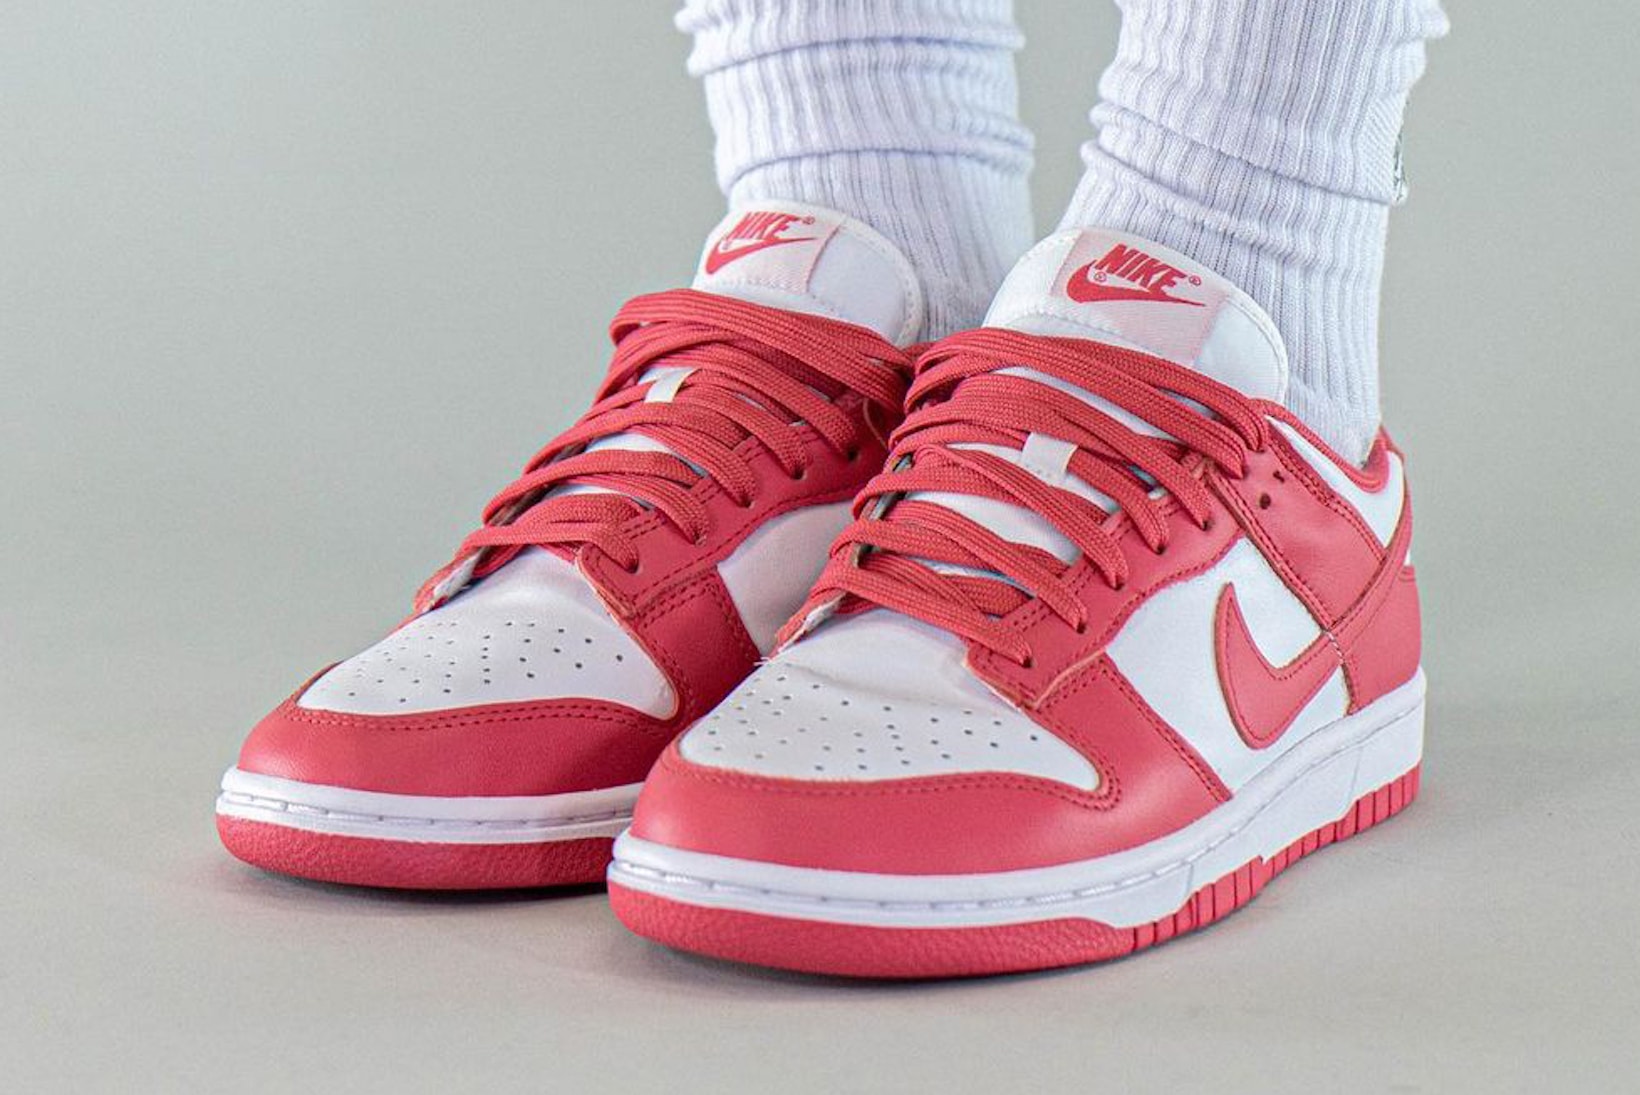 Nike Dunk Low Archeo Pink White Sneakers Footwear Shoes Kicks Sneakerhead Lateral On Foot